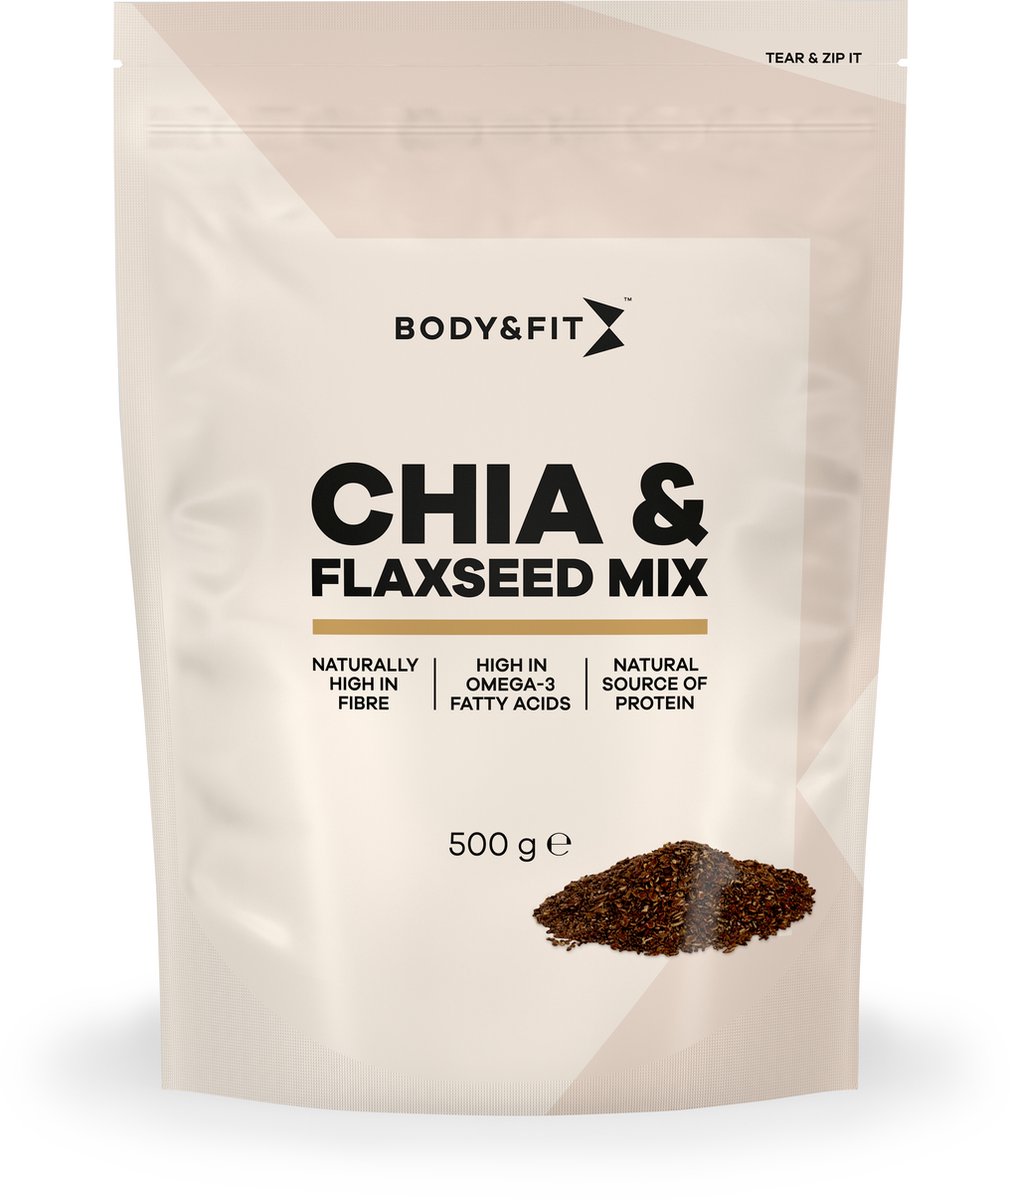 Body & Fit Omega 3, Chia- & Flaxseed Mix - Superfood - Zaden- en Pittenmix - Omega 3, Chiazaad, Lijnzaad Mix - 500 gram - Body & Fit